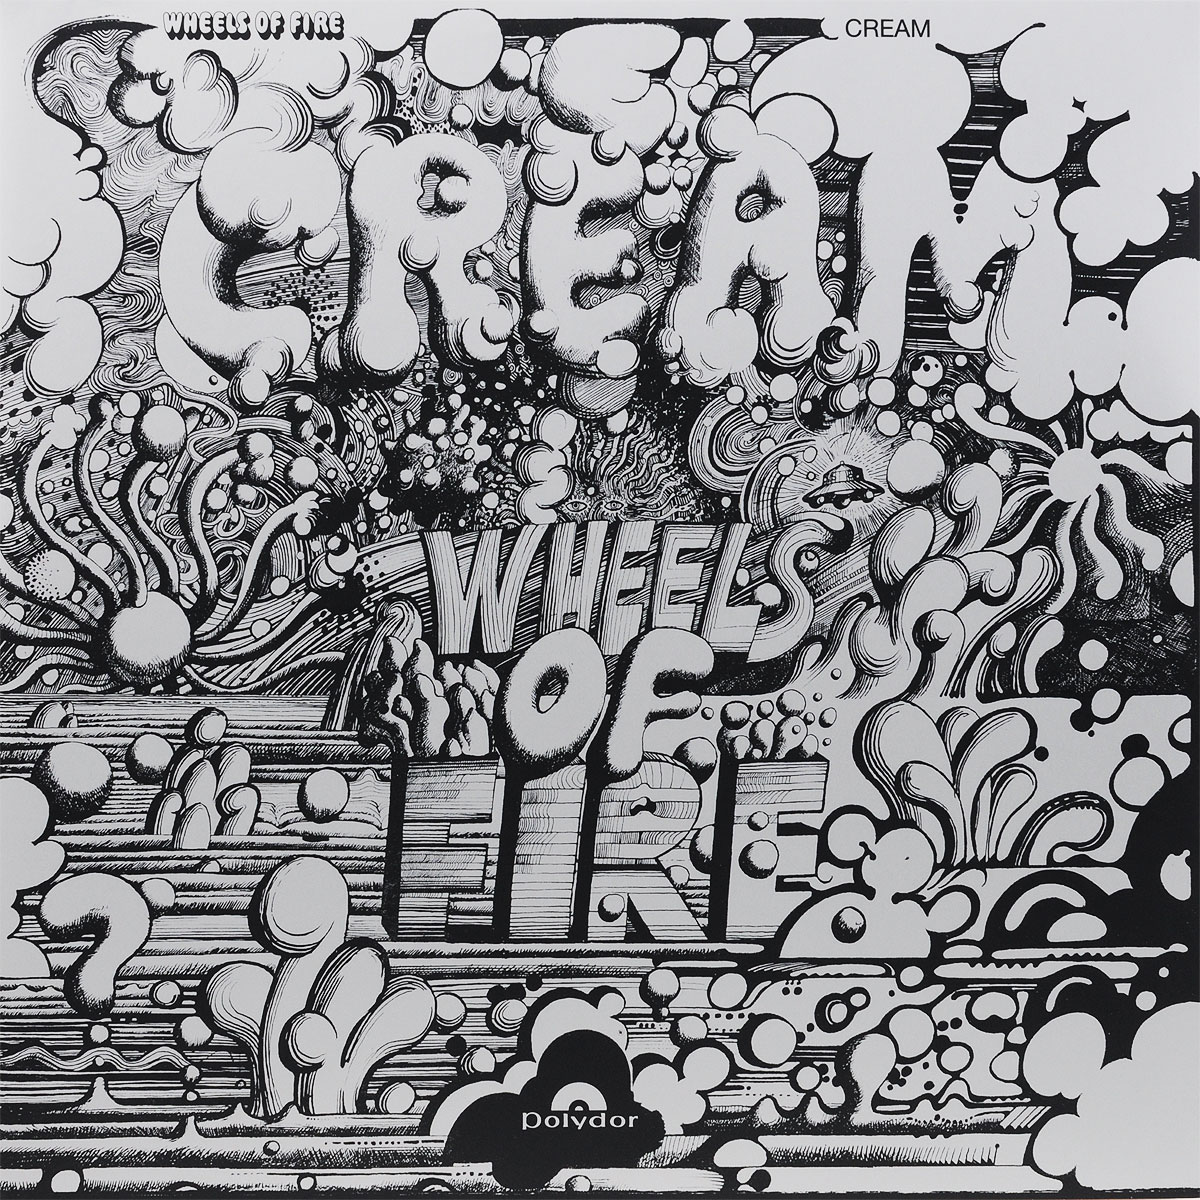 Cream. Wheels Of Fire (2 LP)